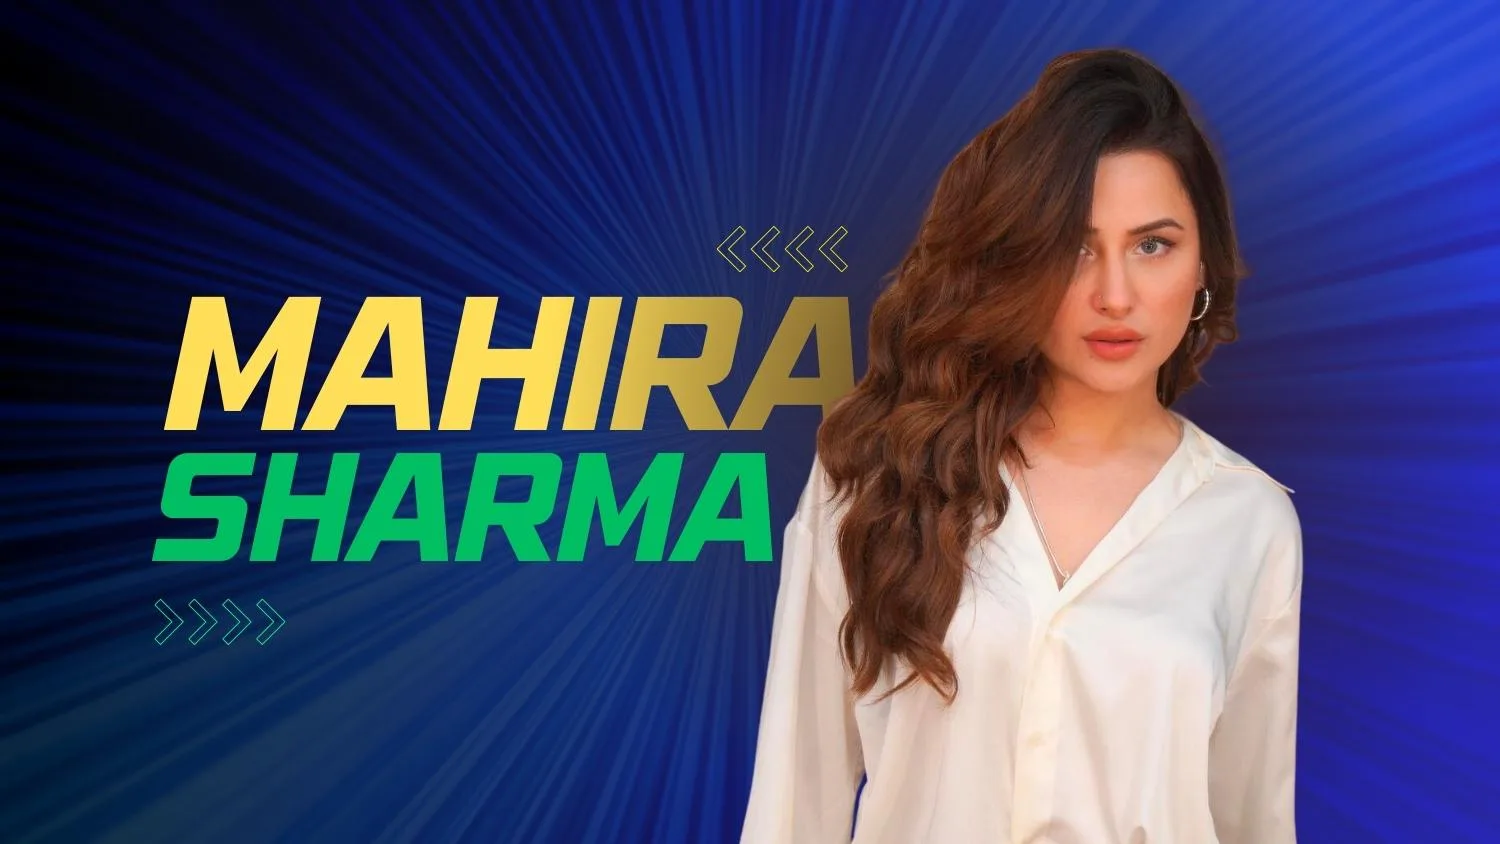 Mahira Sharma net worth, family, and career